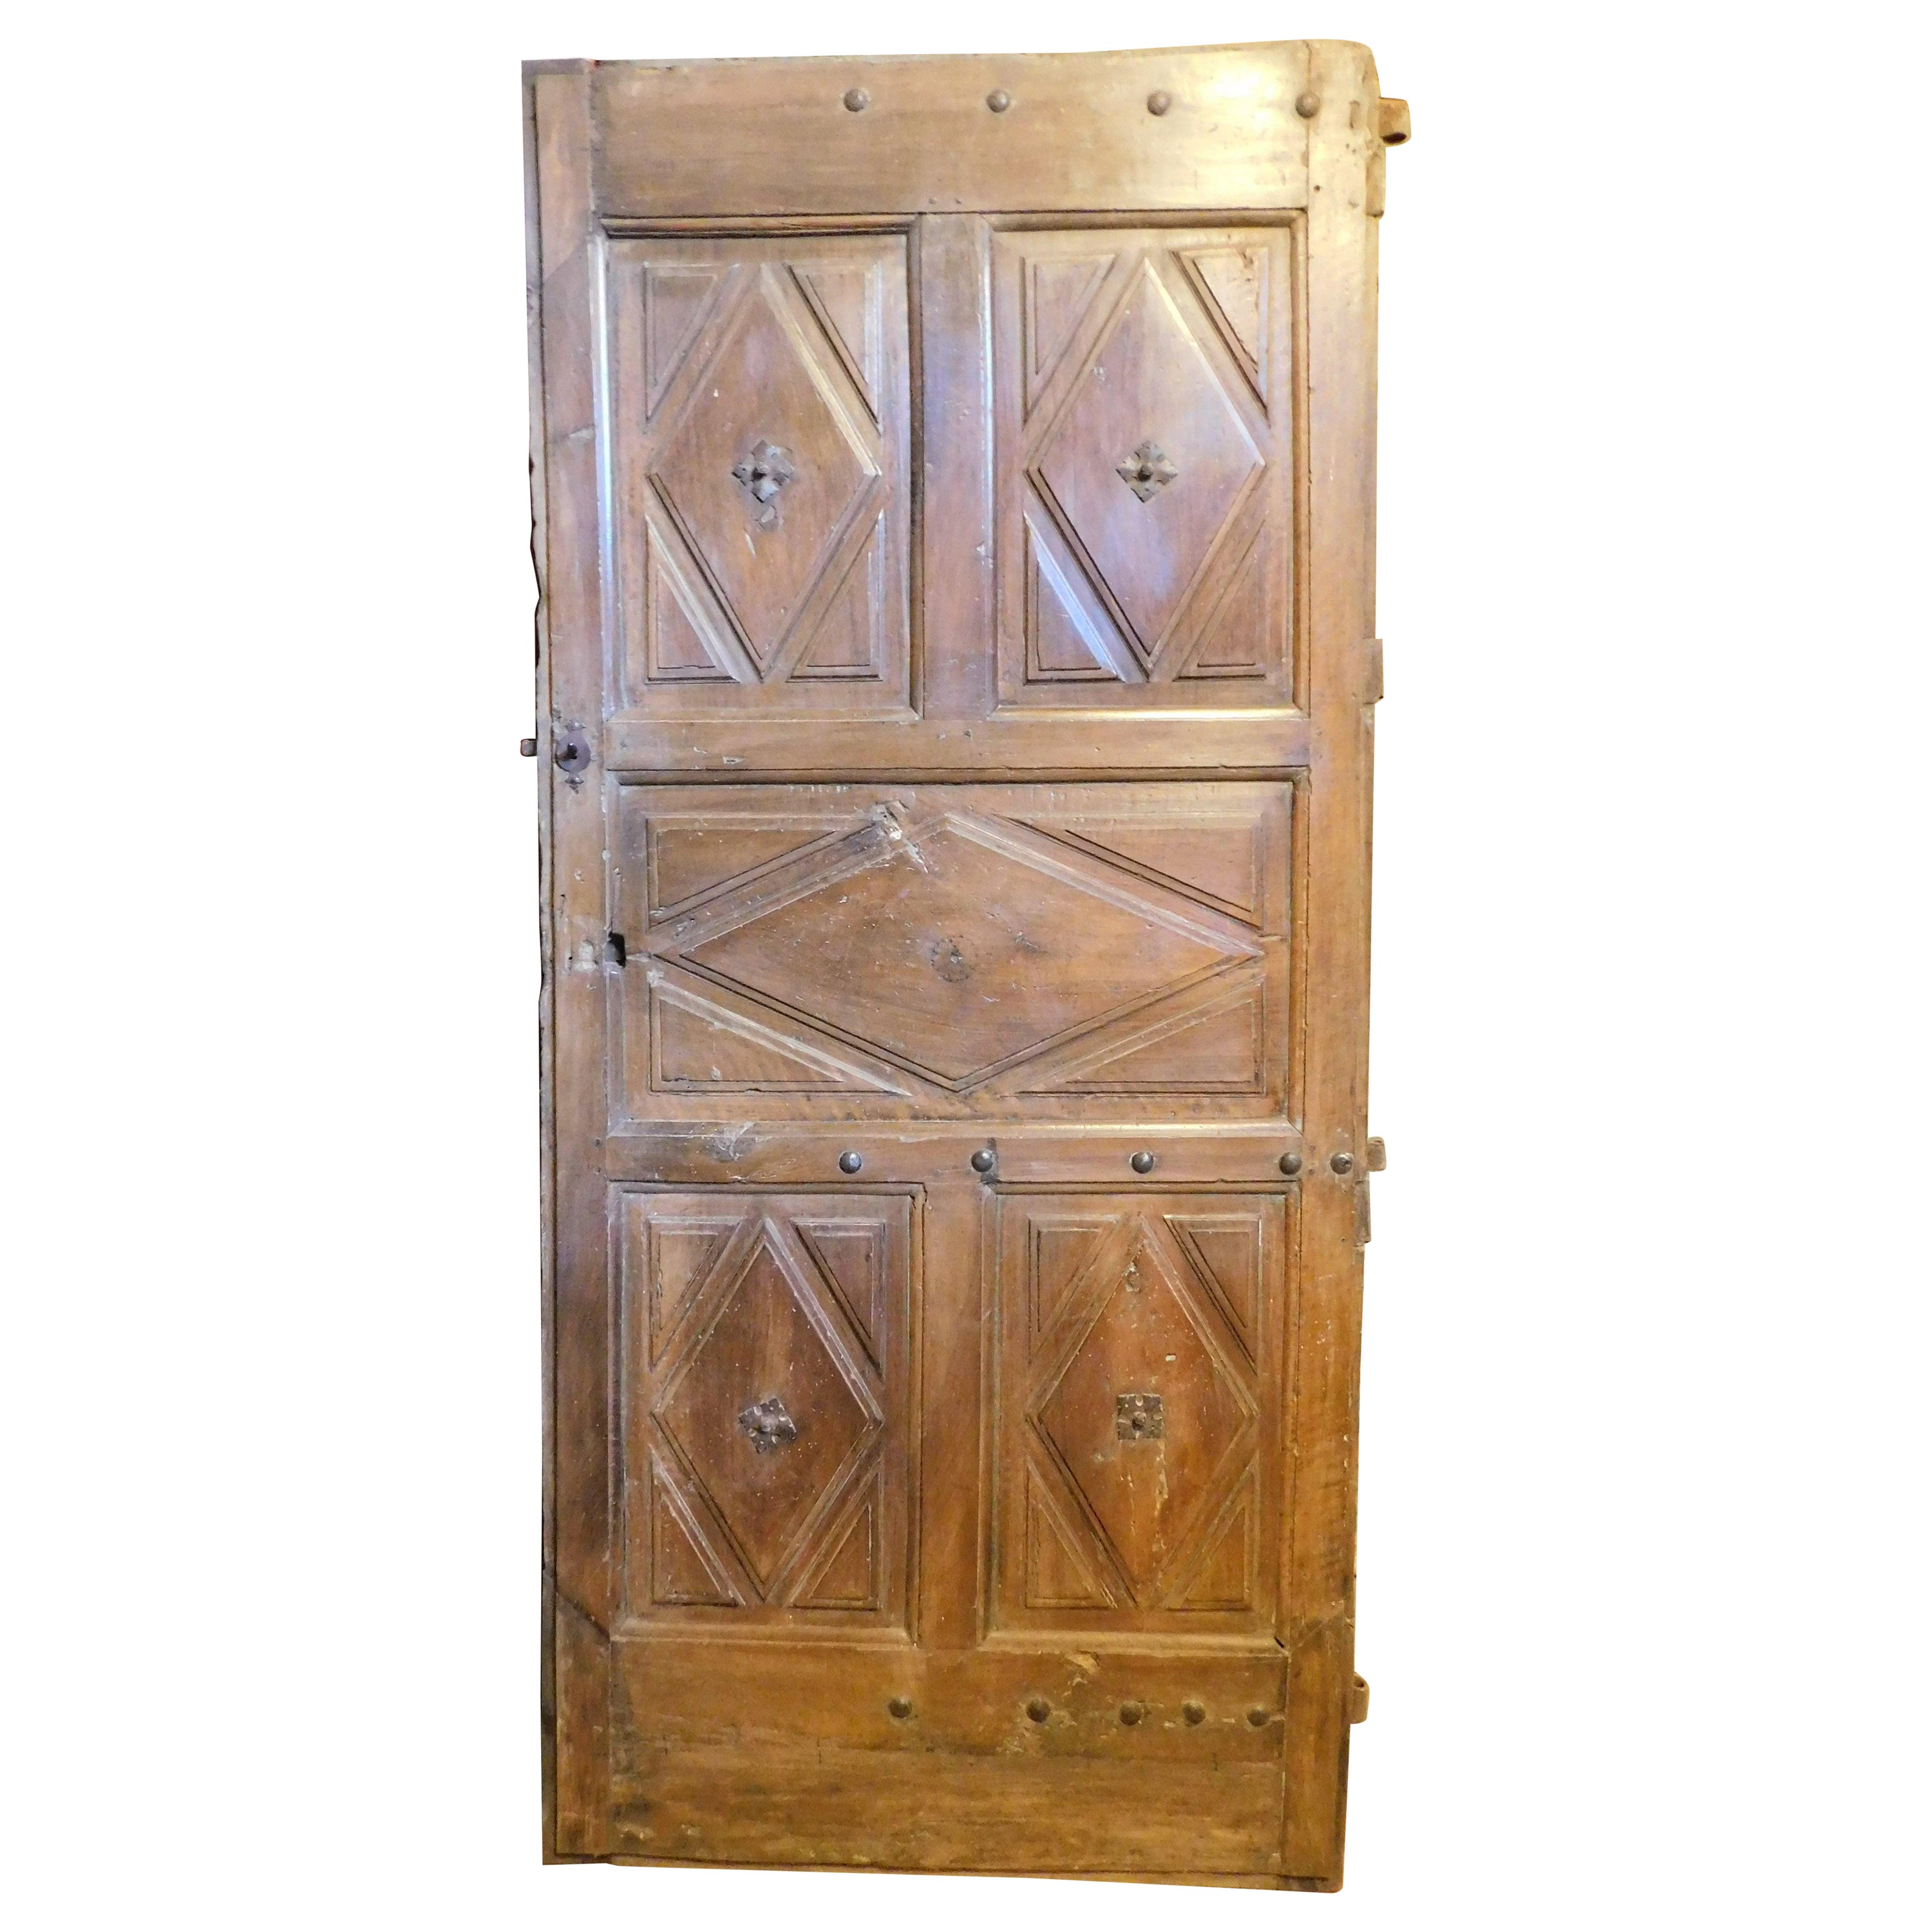 Interieur-Holztür mit rautenförmigen geschnitzten Paneelen, Italien